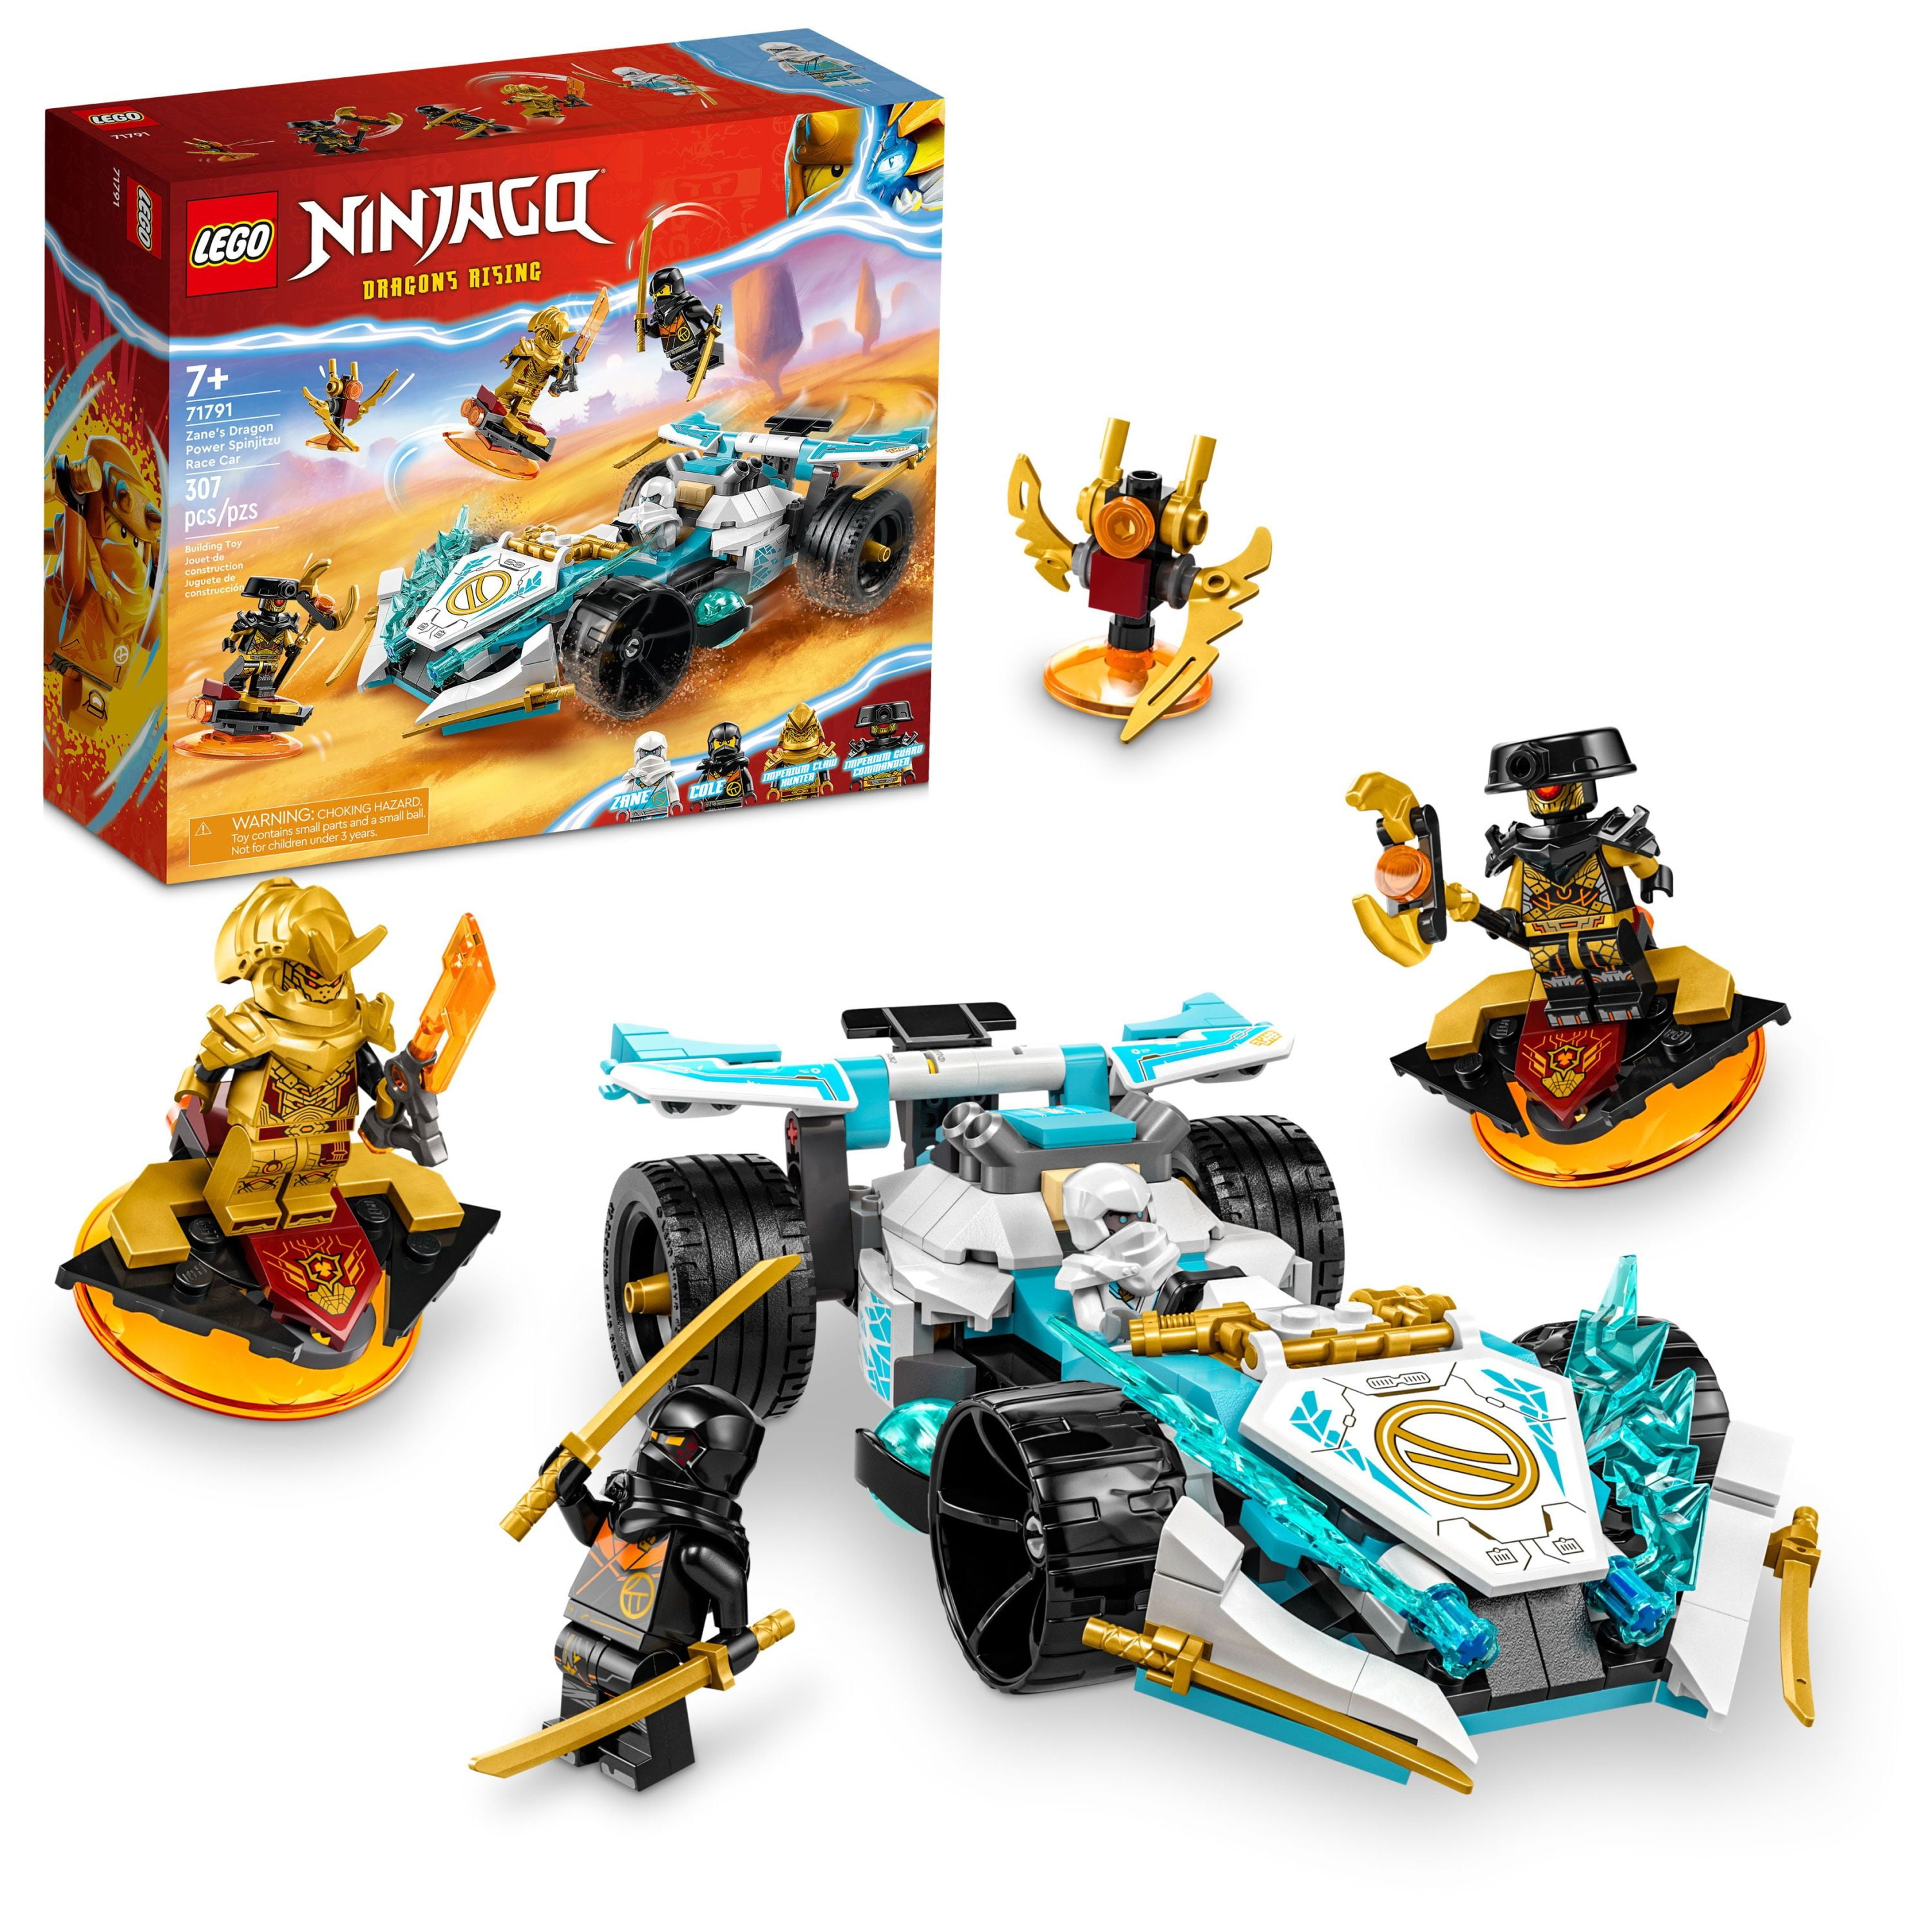 LEGO NINJAGO Zane's Dragon Power Spinjitzu Race Car Building Toy Set, Features a Ninja Car, 2 Hover Flyers, Dragon Toy, and 4 Minifigures, Gift for Kids Aged 7+ - Walmart.com